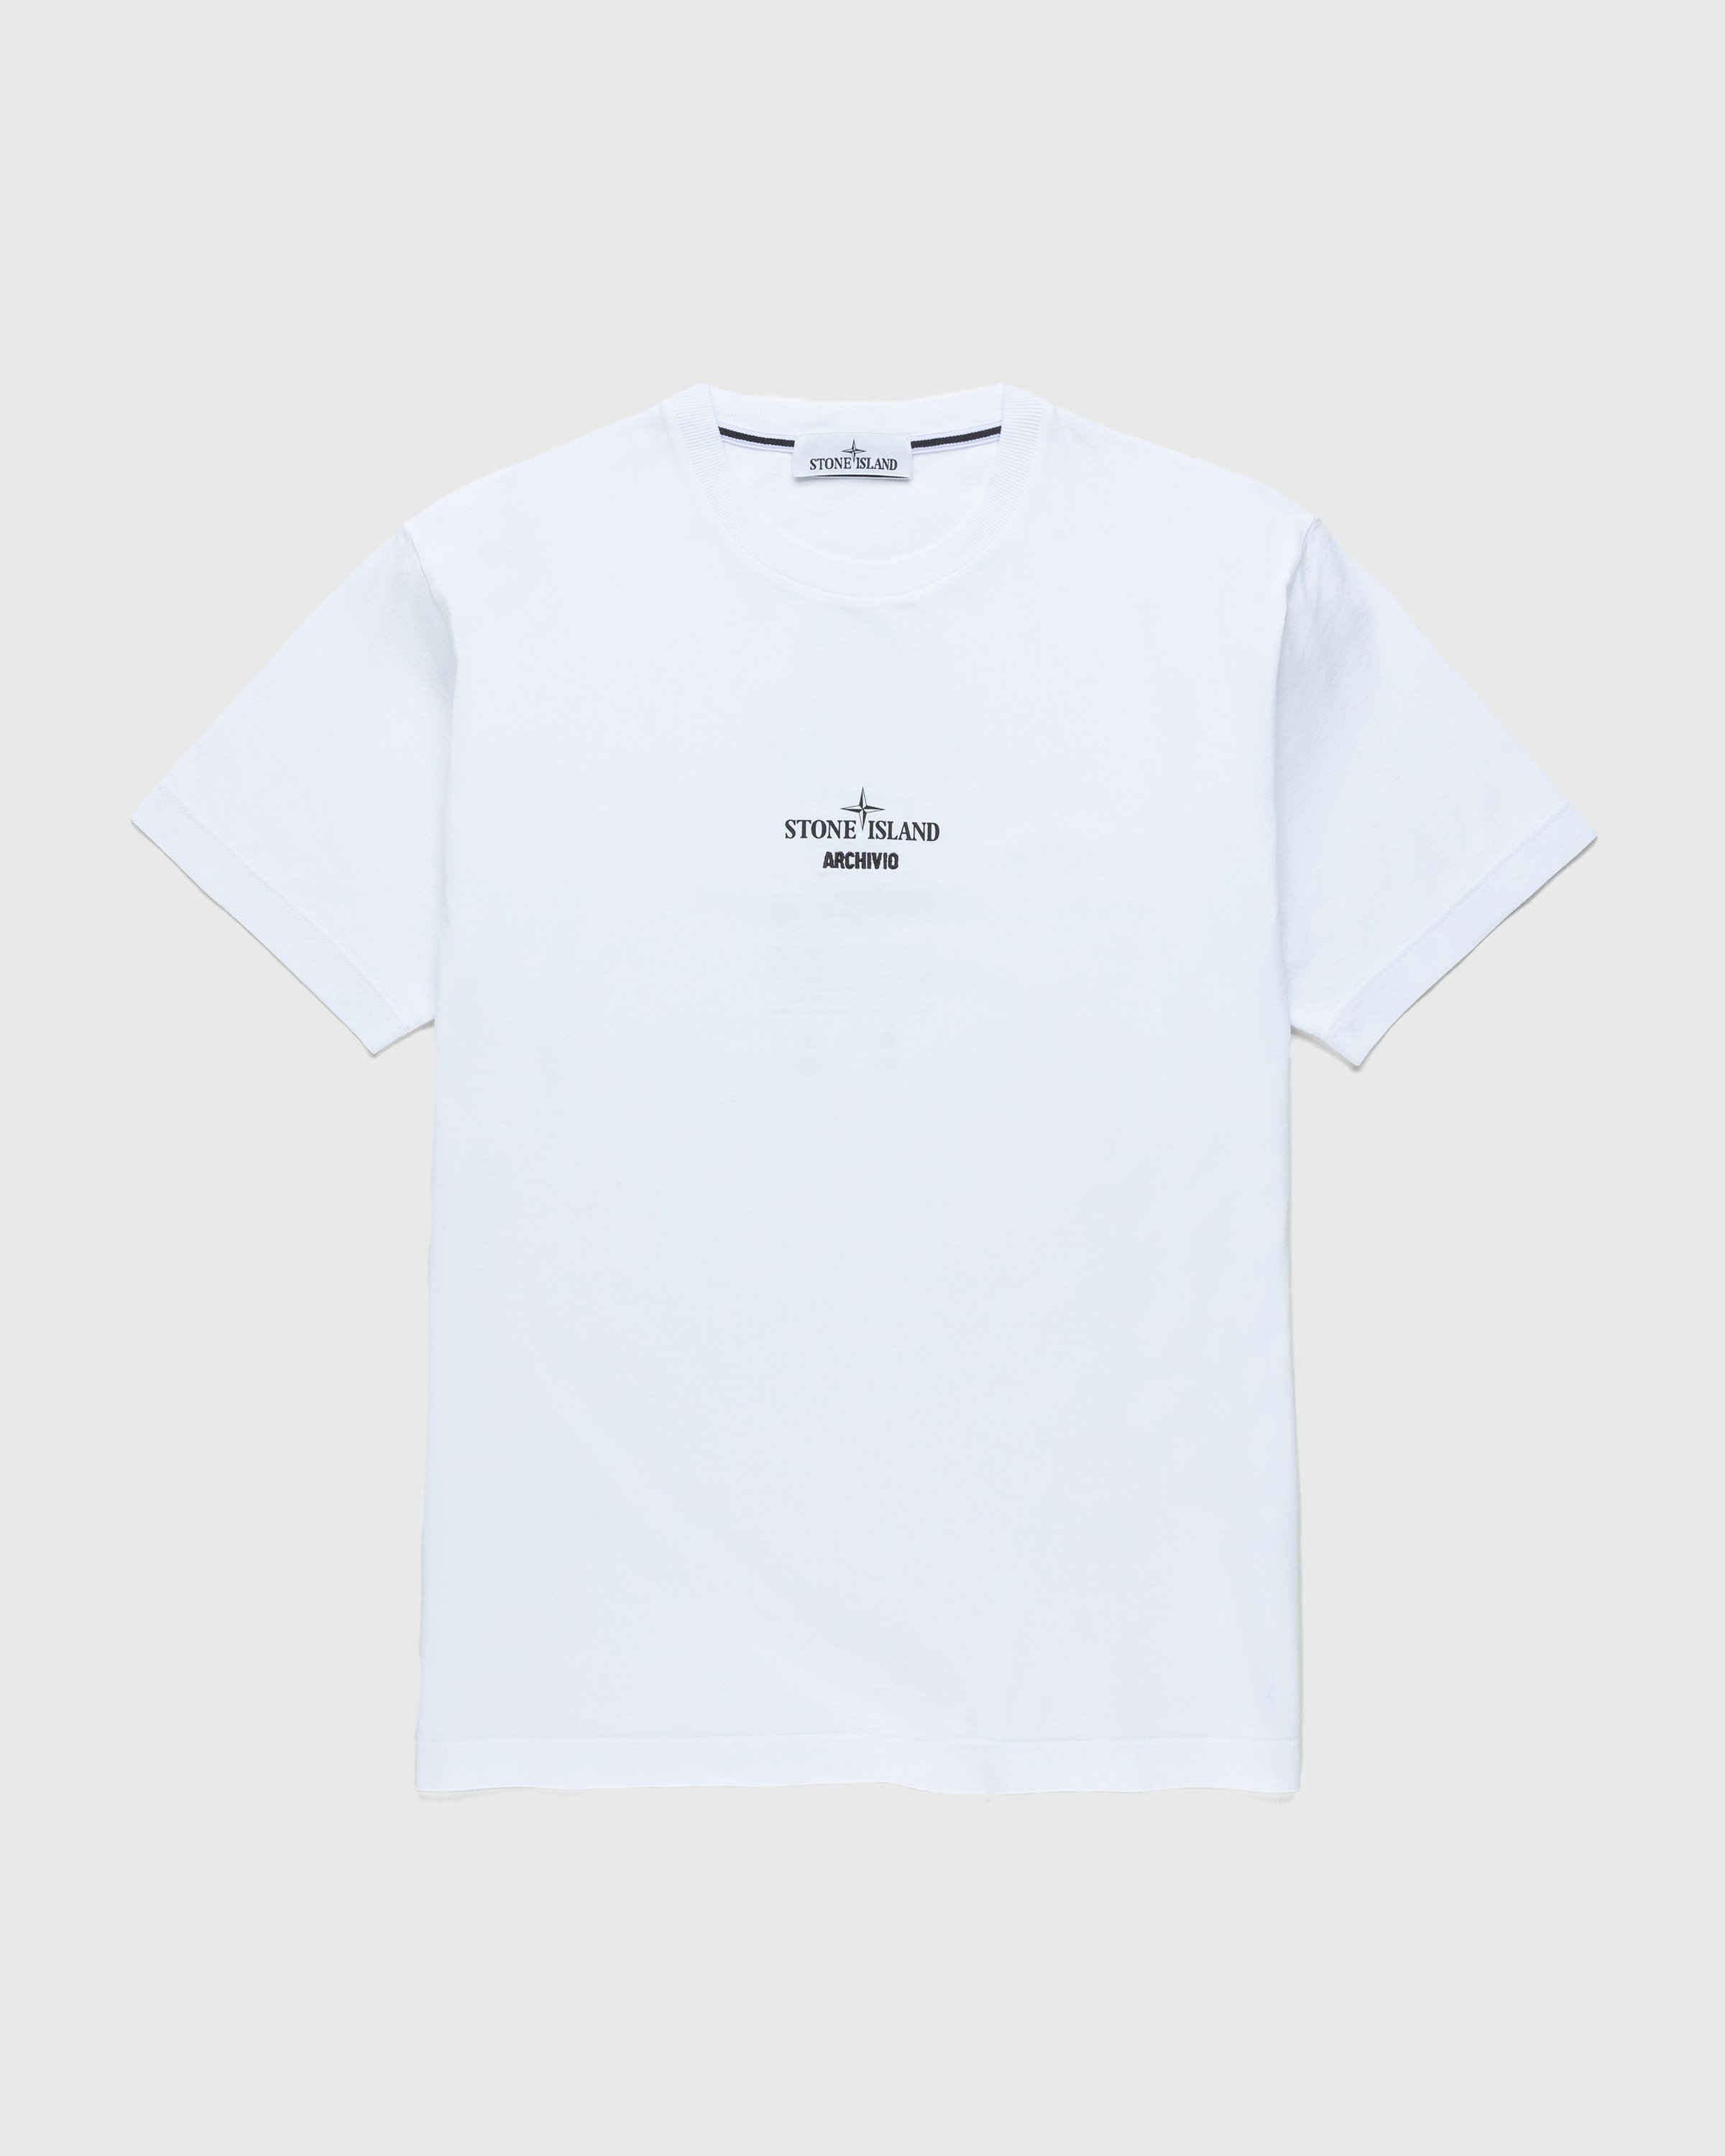 Stone Island - Archivio T-Shirt White - Clothing - White - Image 1